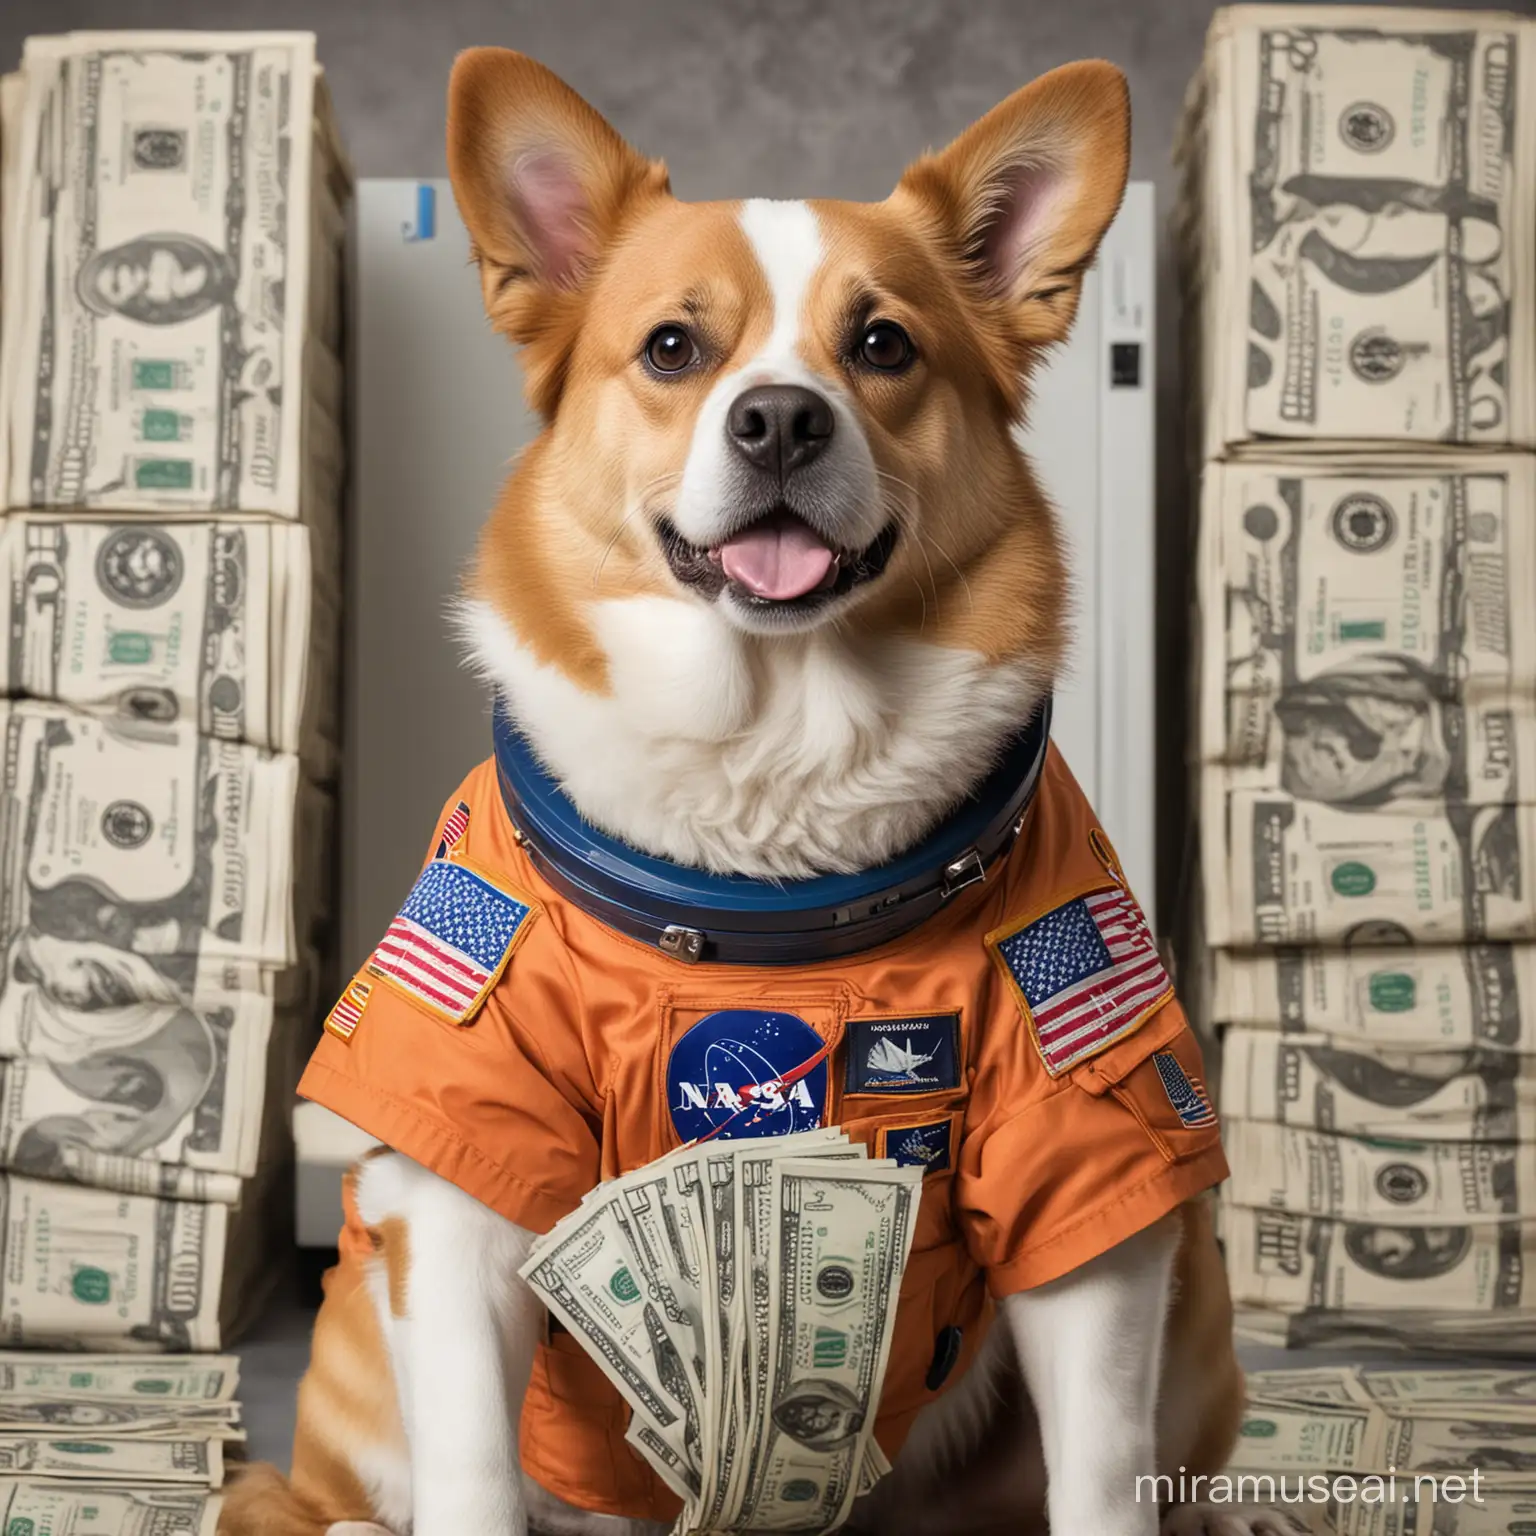 NASA Canine Astronaut with Treasures